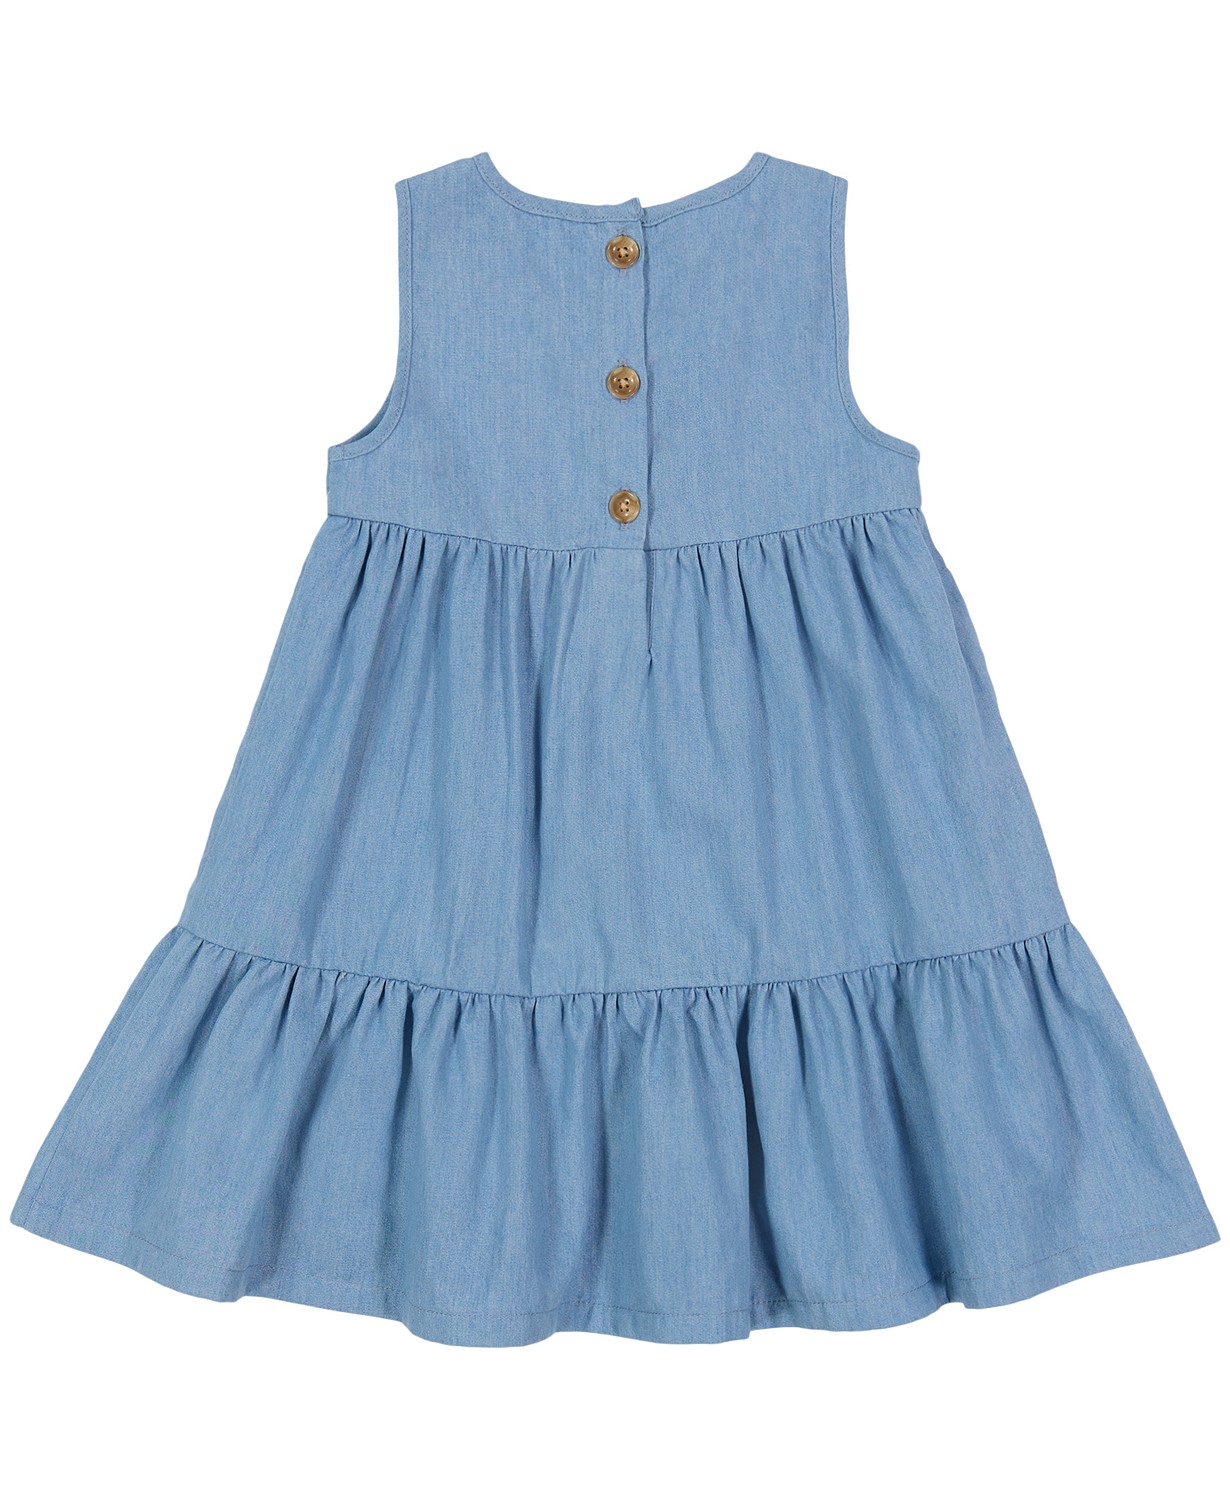  Toddler Girls Sleeveless Chambray Ruffle Hem Dress